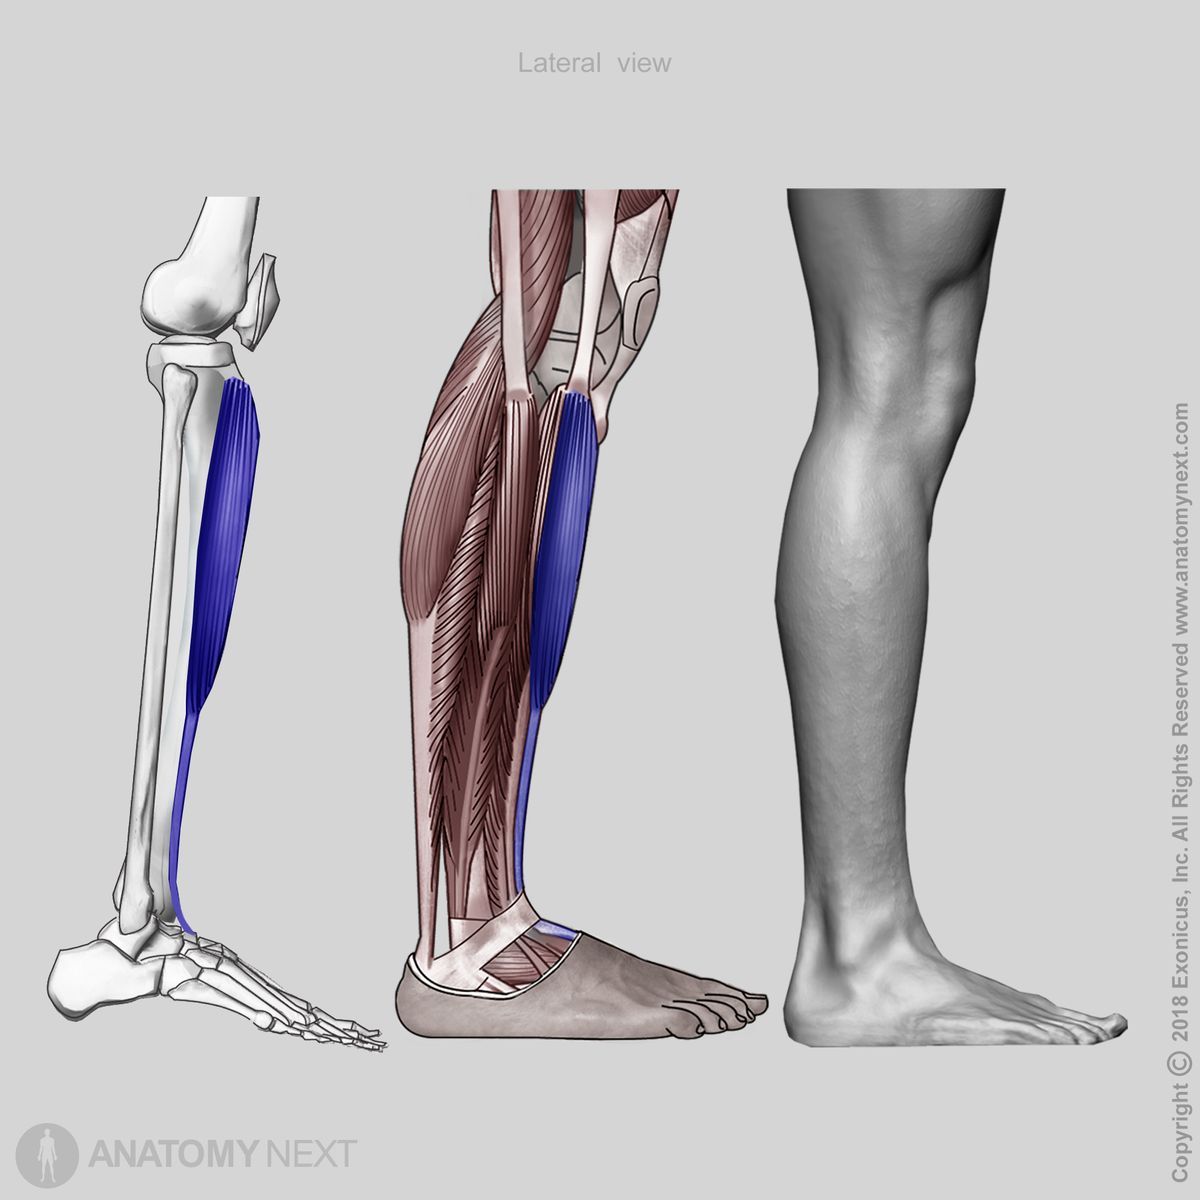 Tibialis anterior, Origin of tibialis anterior, Insertion of tibialis anterior, Anterior compartment of leg, Leg extensors, Leg muscles, Anterior compartment muscles, Human leg